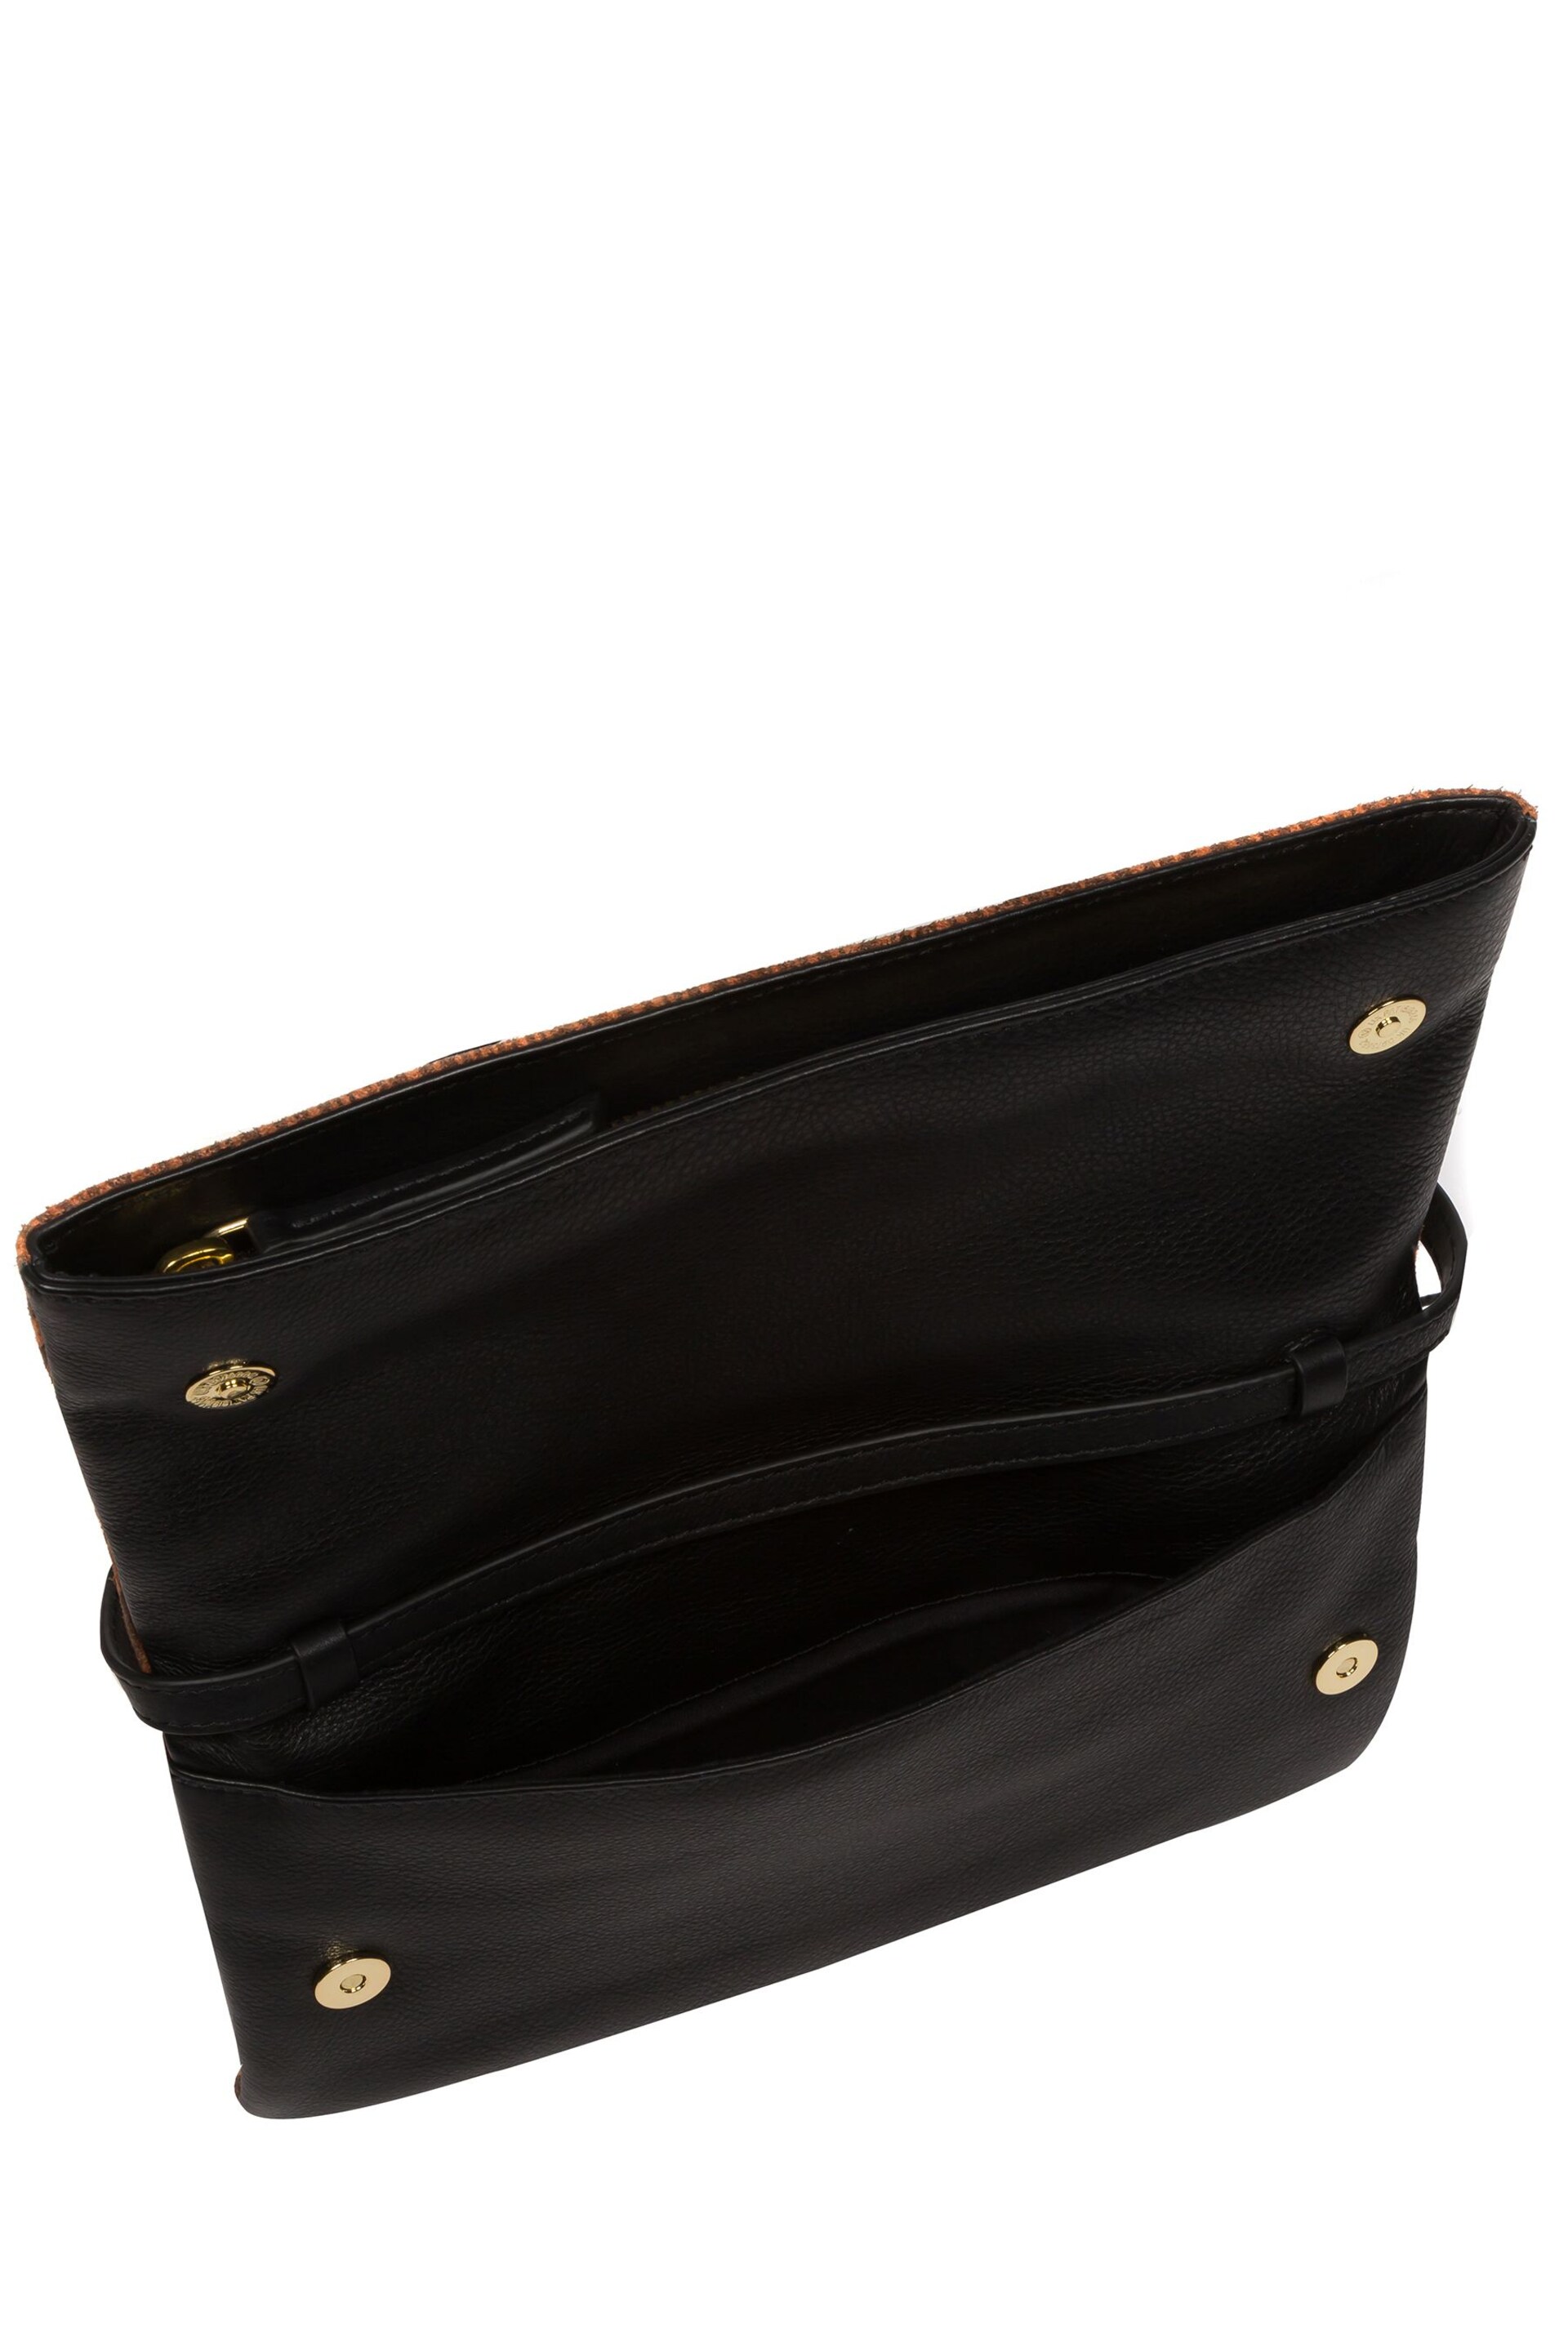 Pure Luxuries London Selene Nappa Leather Cross-Body Clutch Bag - Image 7 of 7